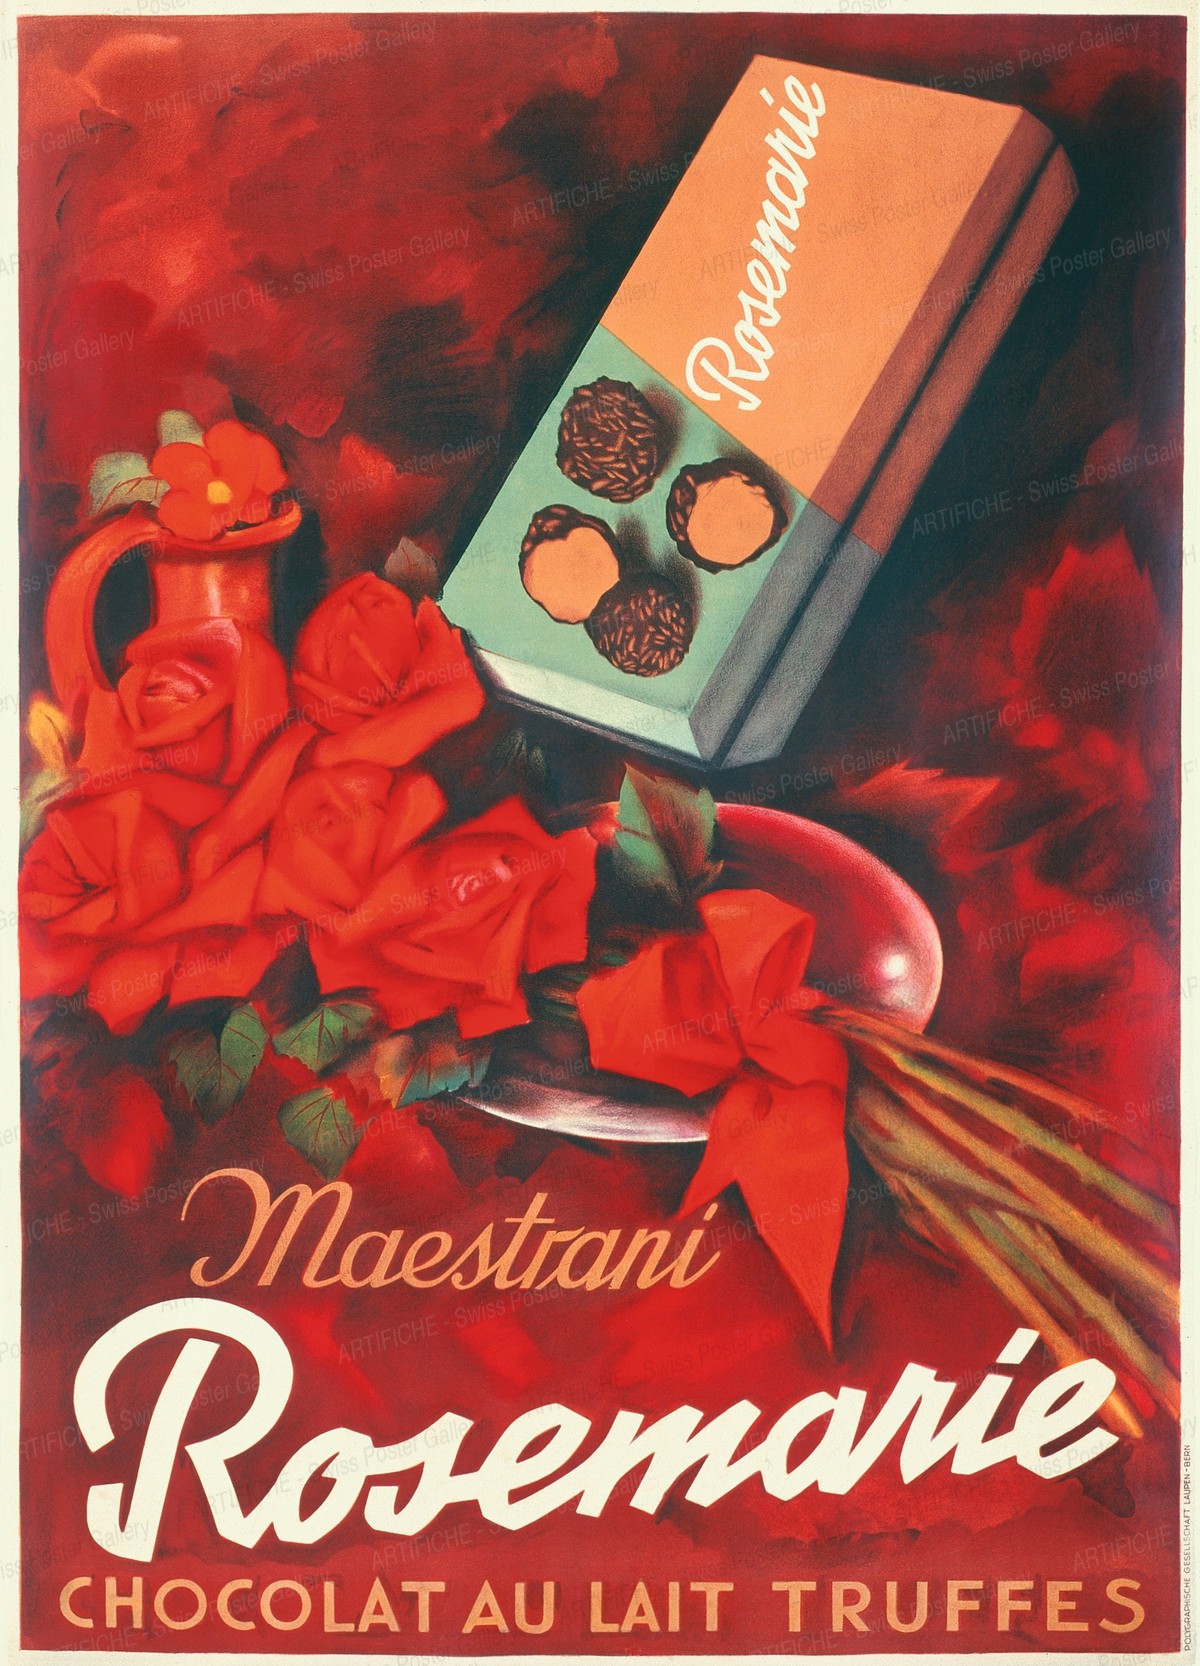 Maestrani – Rosemarie – Milk chocolate, Artist unknown